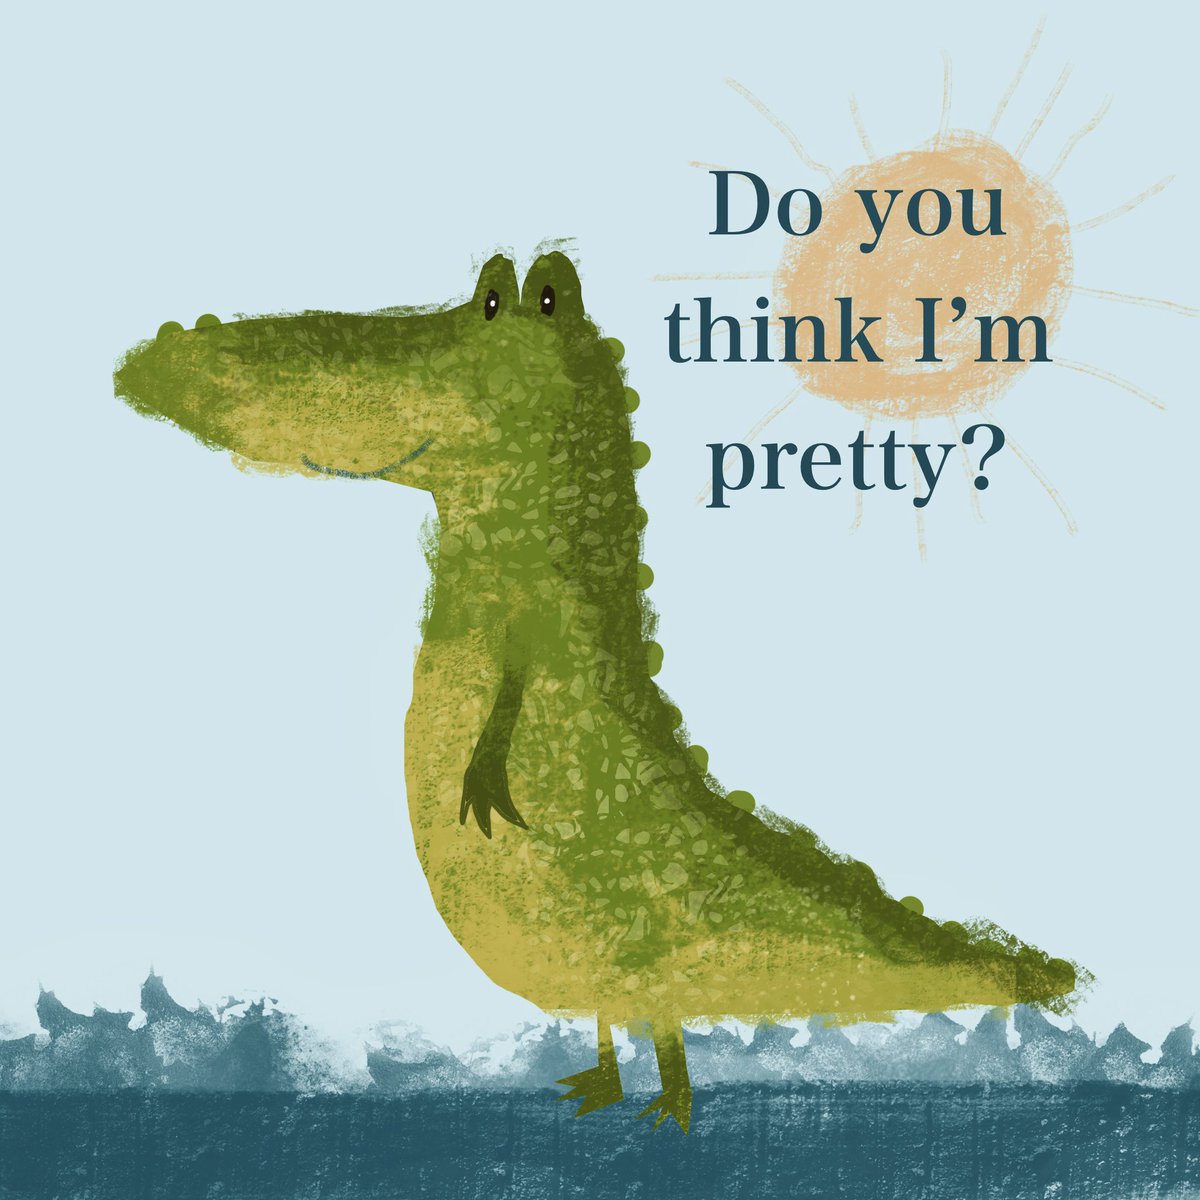 Alligator having a low self esteem day. #kidlitart #childrensbooks